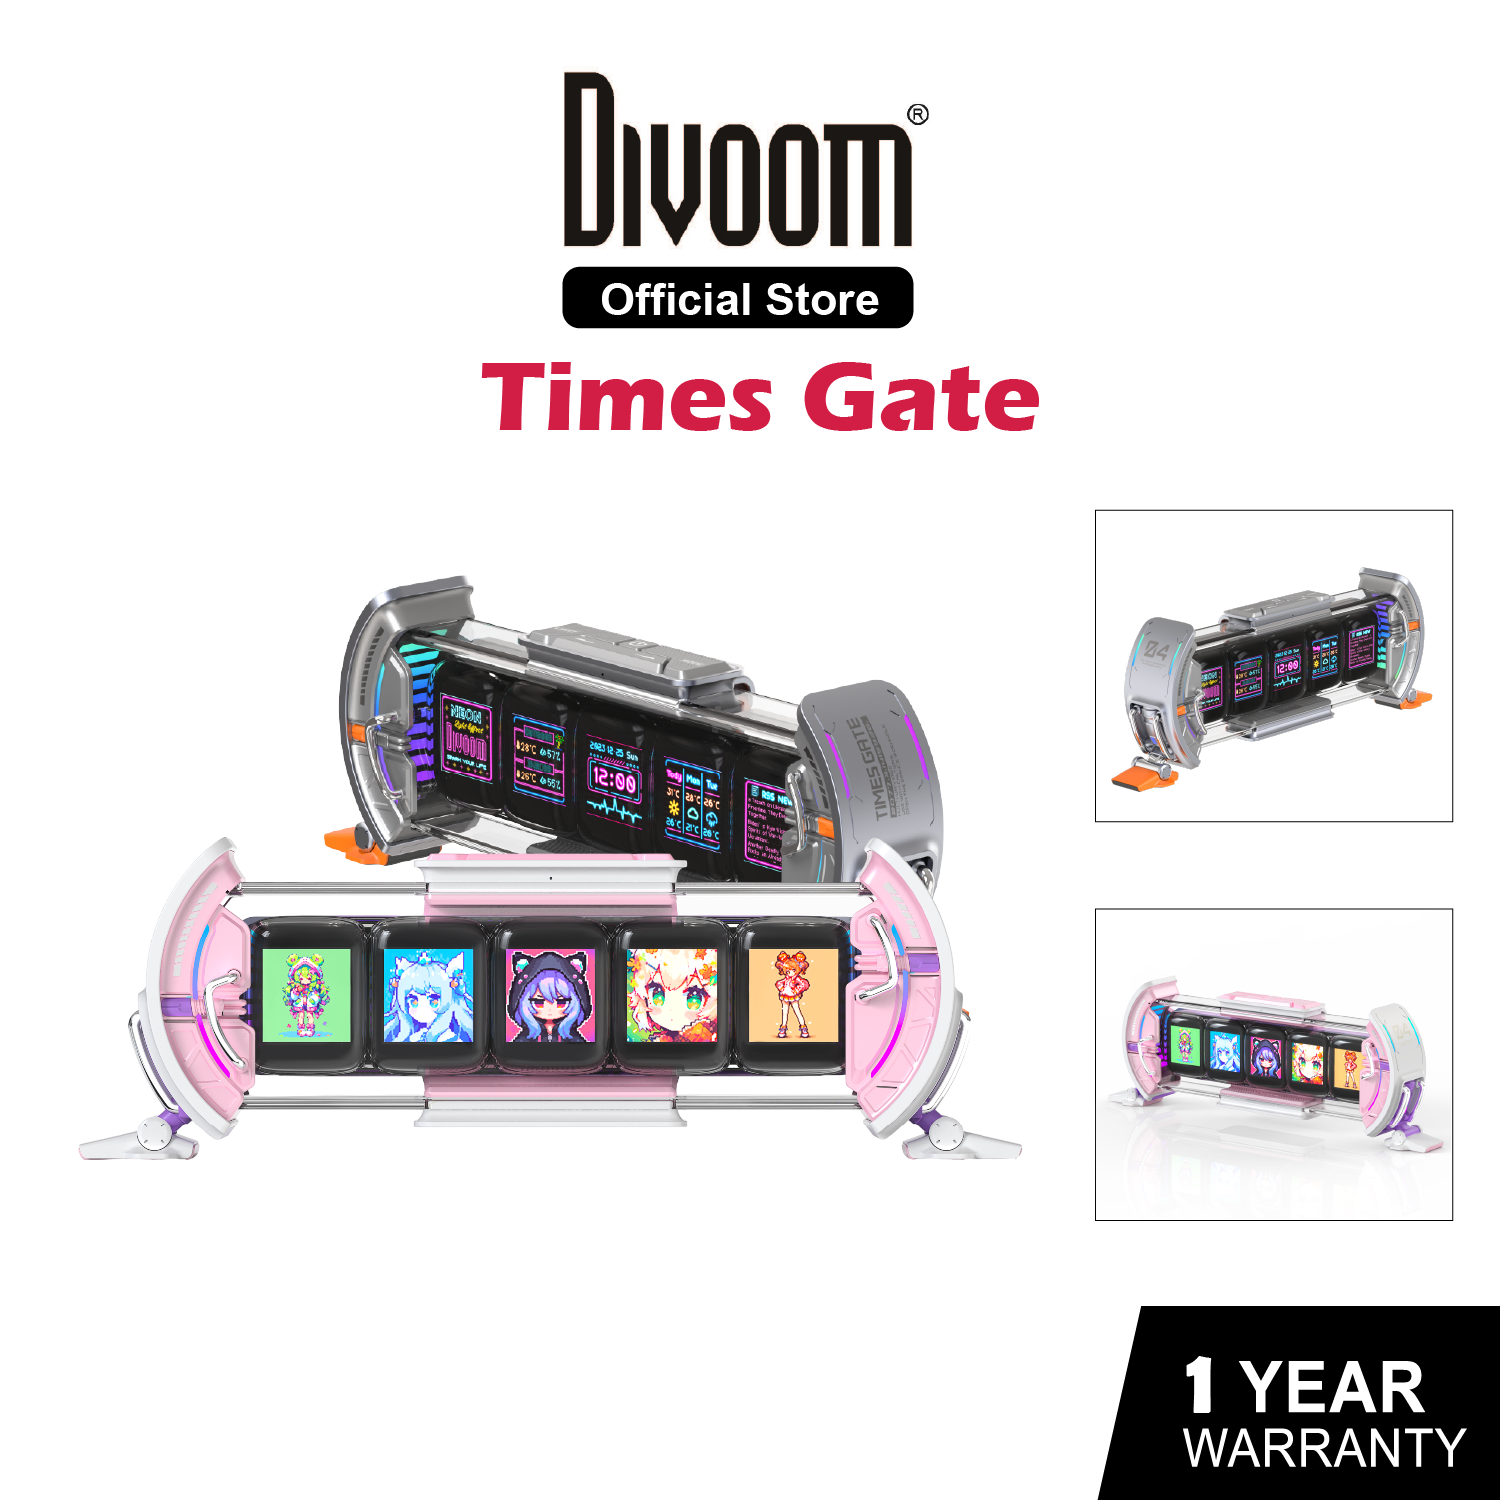 Divoom Times Gate - Pixel Art Informative LED Display | 1 Year 